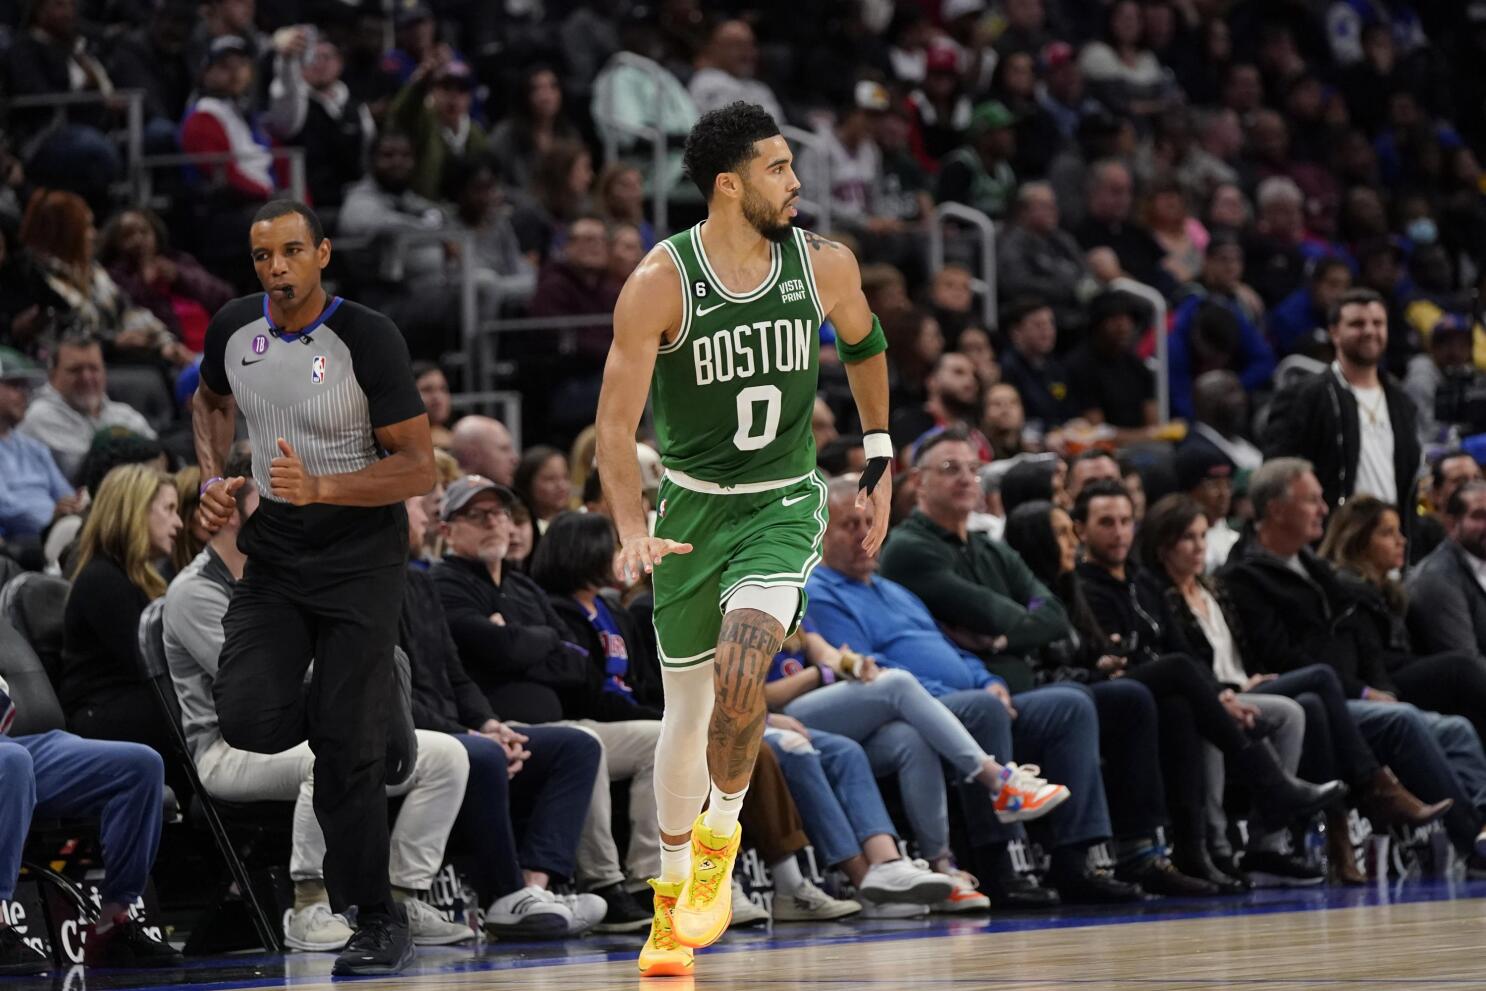 NBA Retweet on X: Celtics Big 4 tonight: Jayson Tatum: 28 points